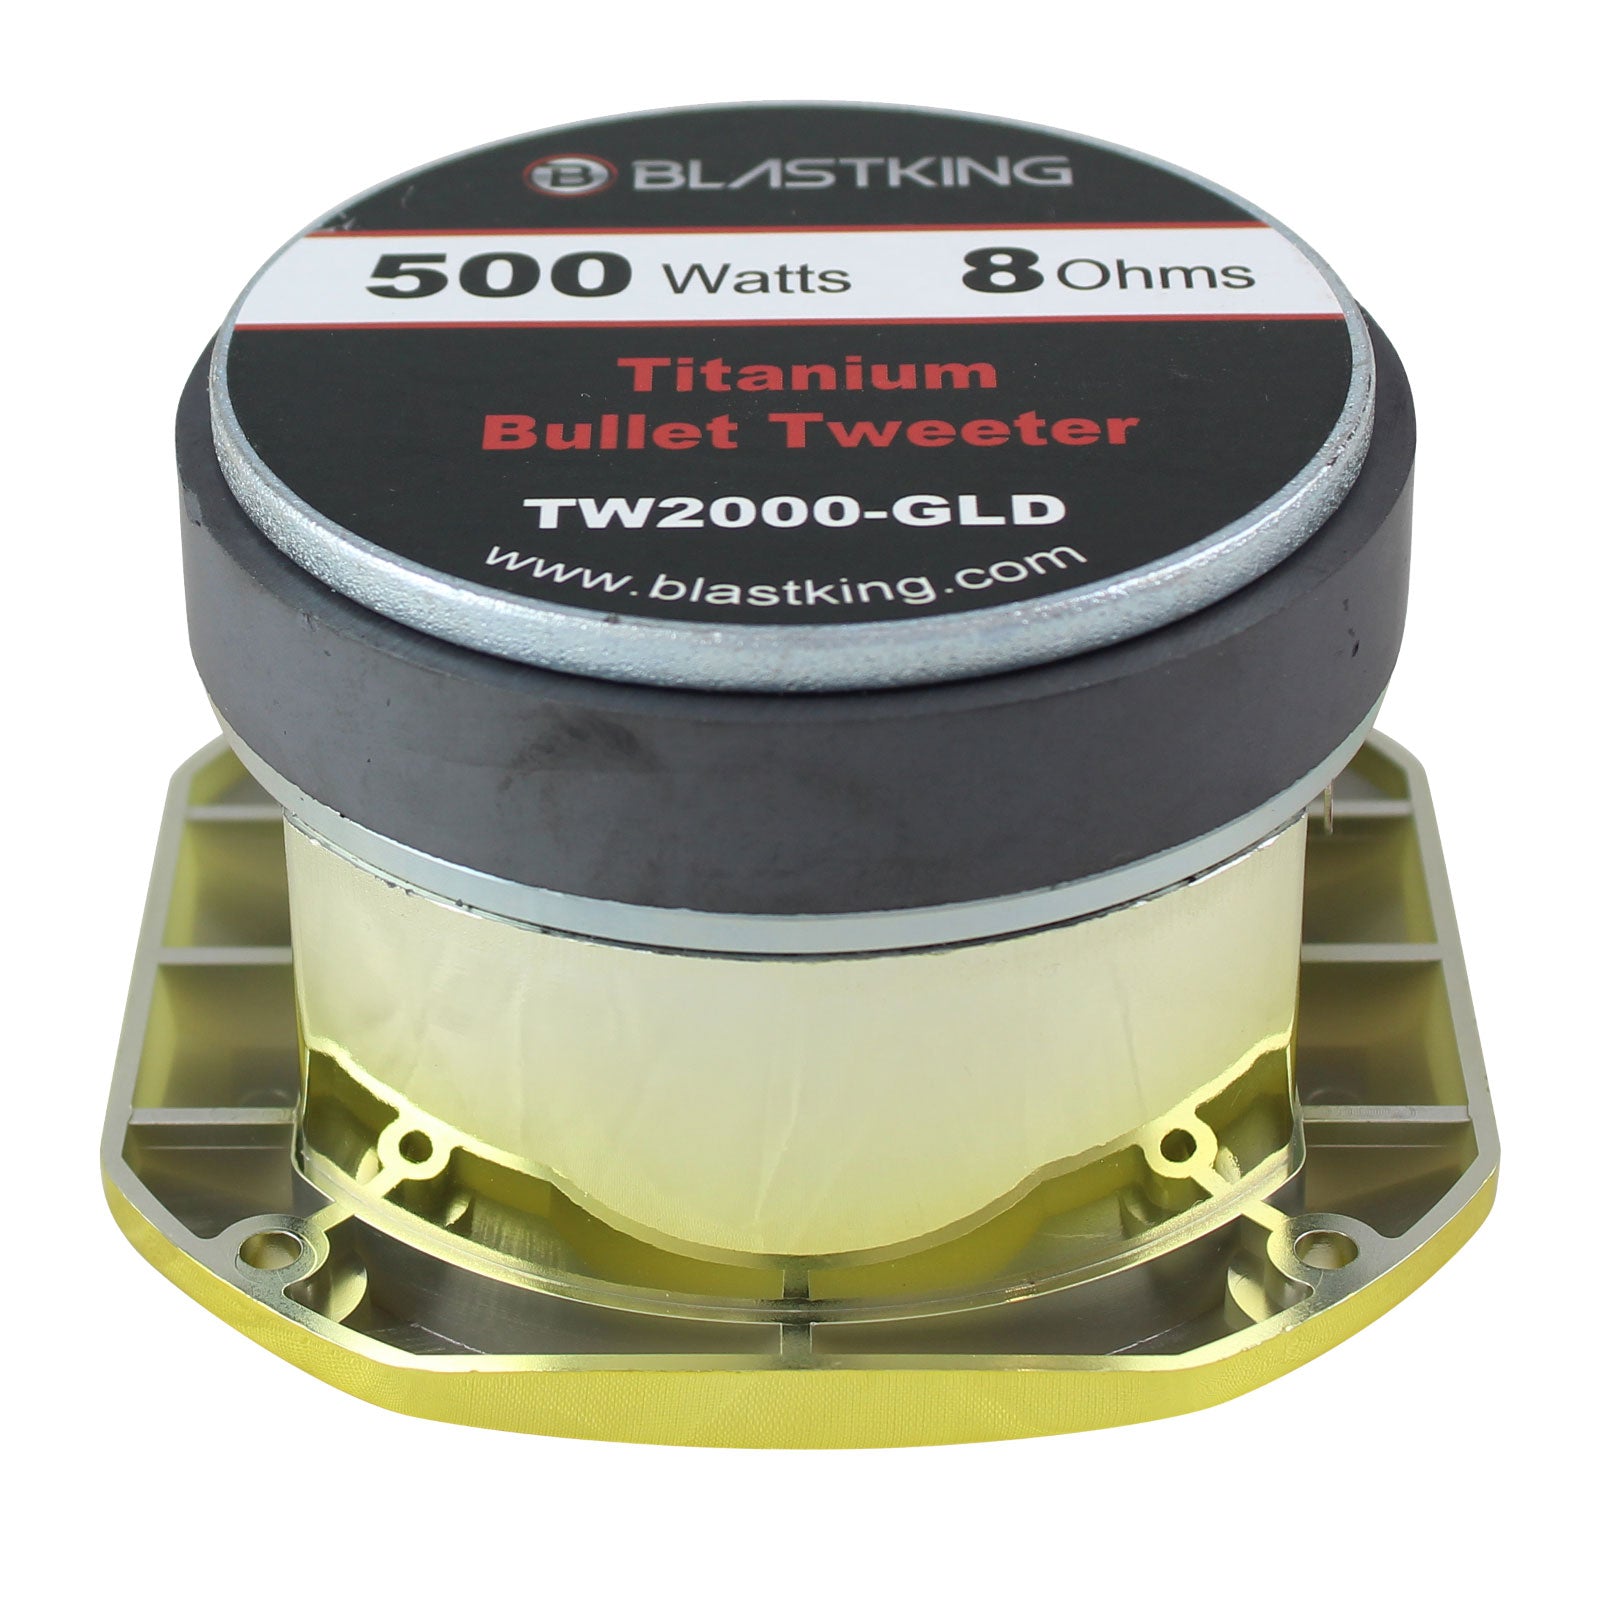 Blastking TW2000-GLD 500 Watts 4x4 inch 1.5 inch VC Titanium Bullet Tweeter Gold